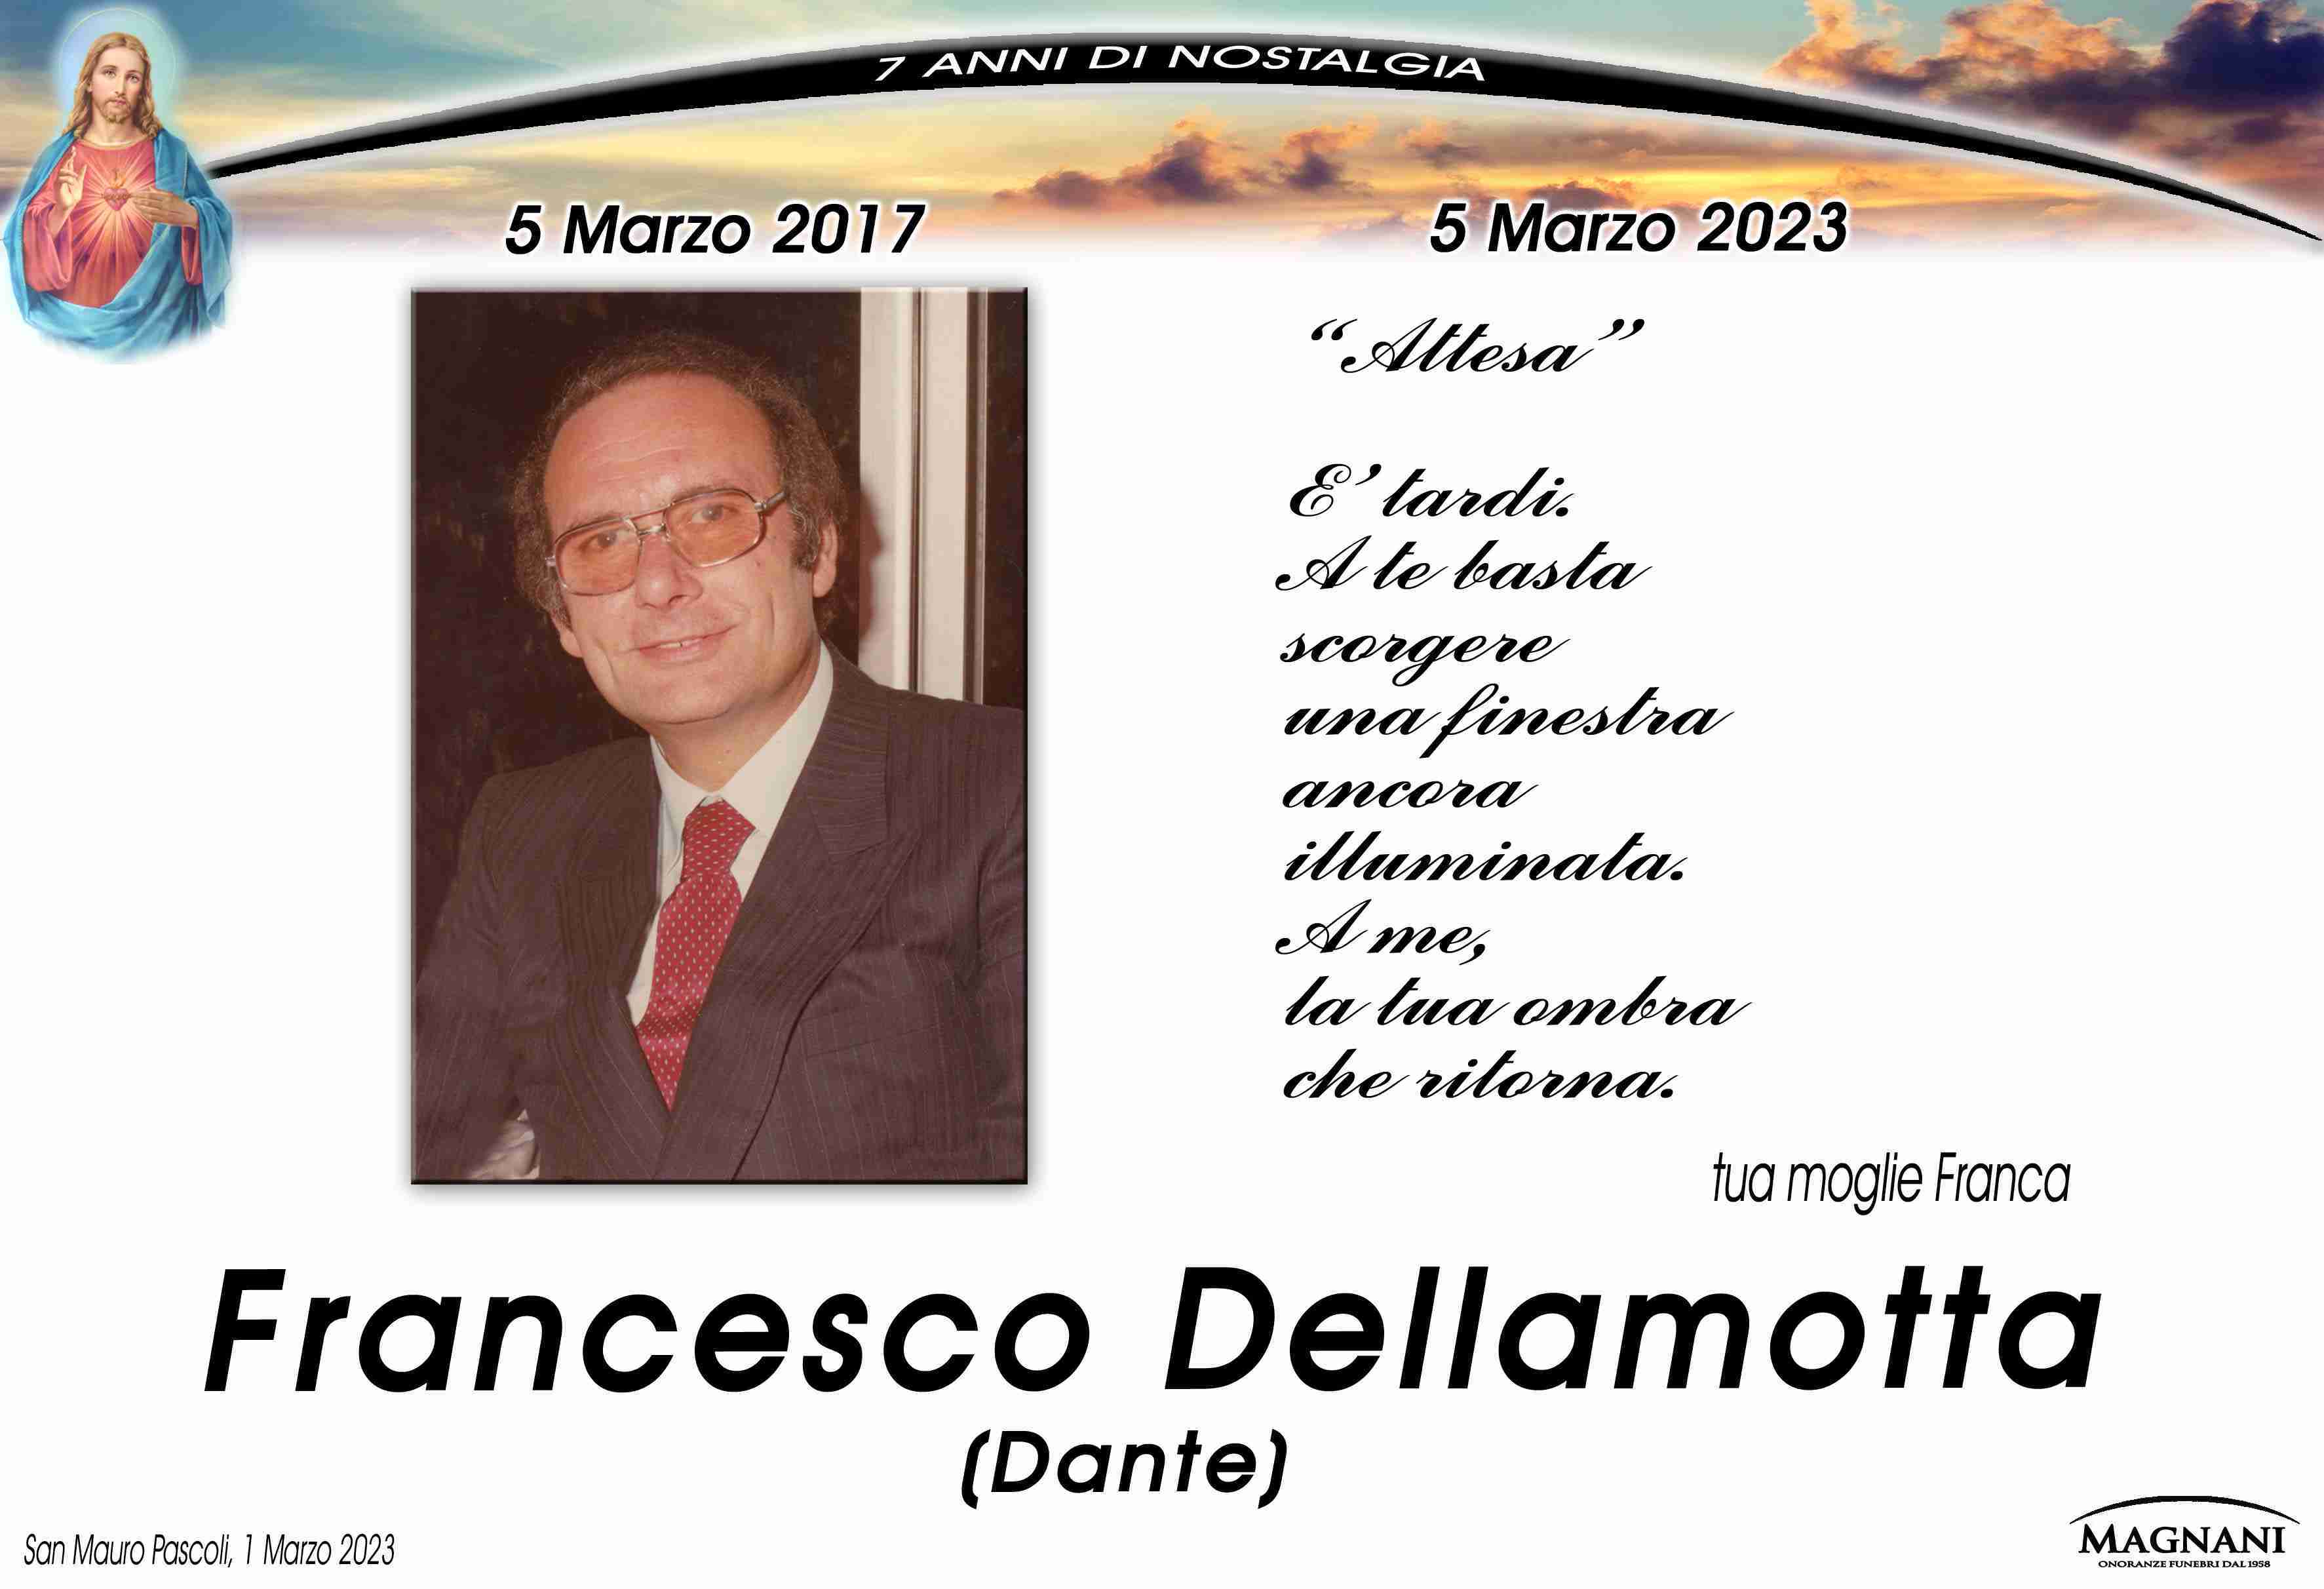 Dellamotta Francesco